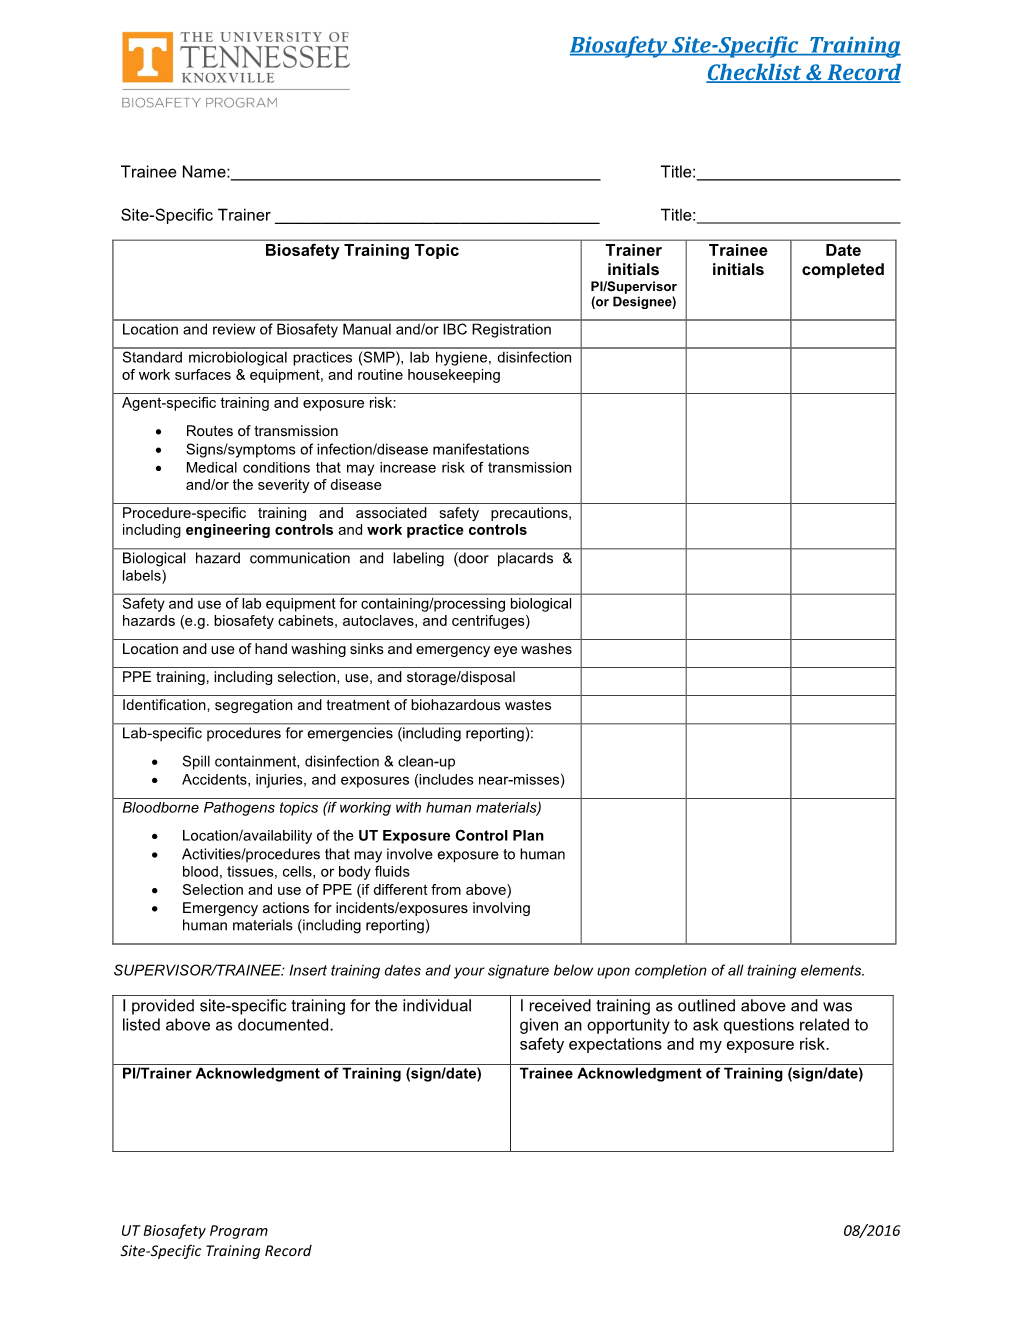 Biosafety Site-Specific Training Checklist & Record